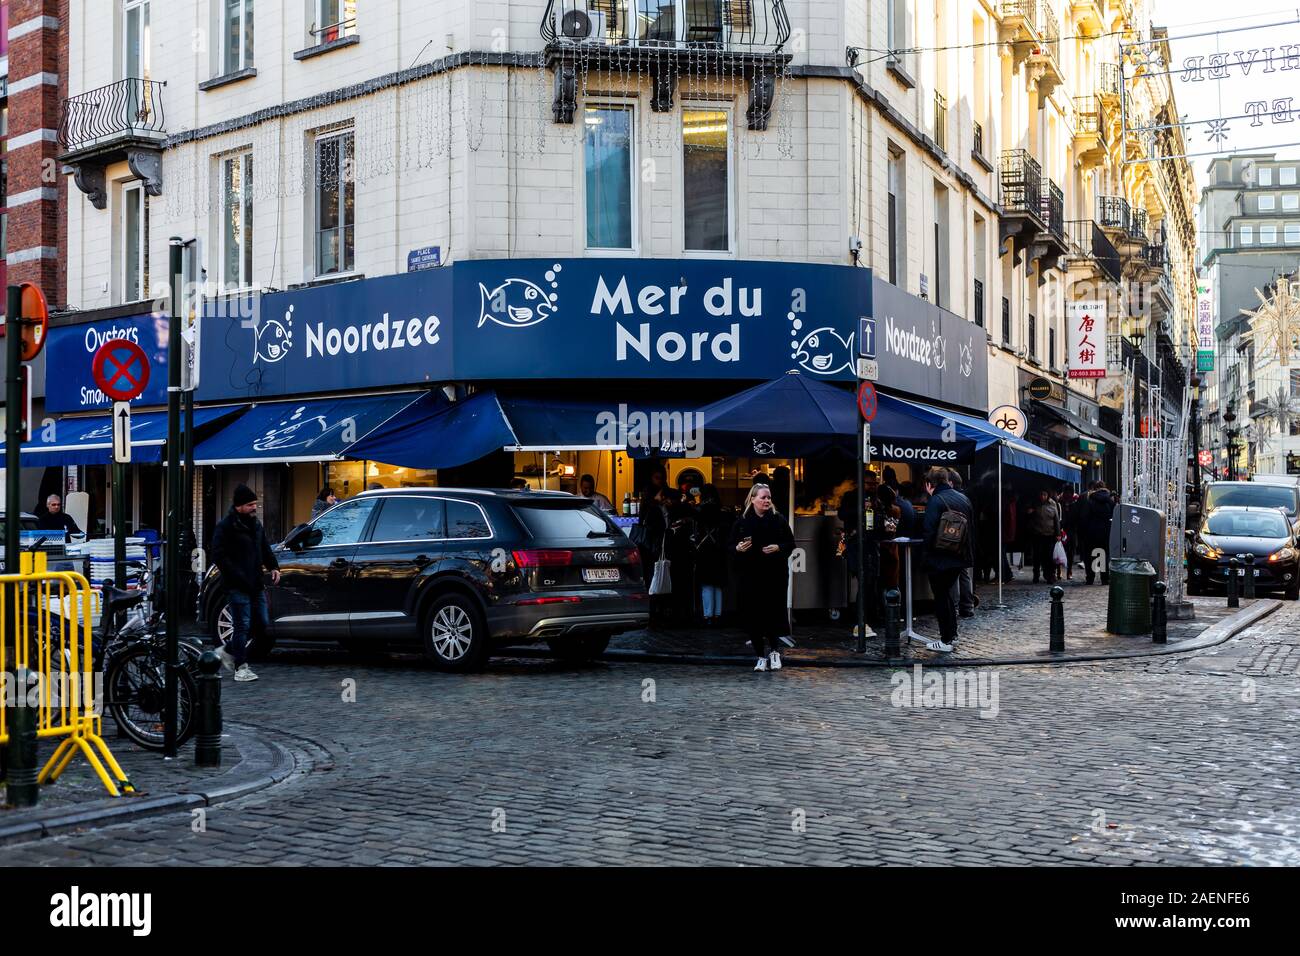 Noordzee - Mer du Nord, famous fish bar in Brussels, Belgium Stock Photo